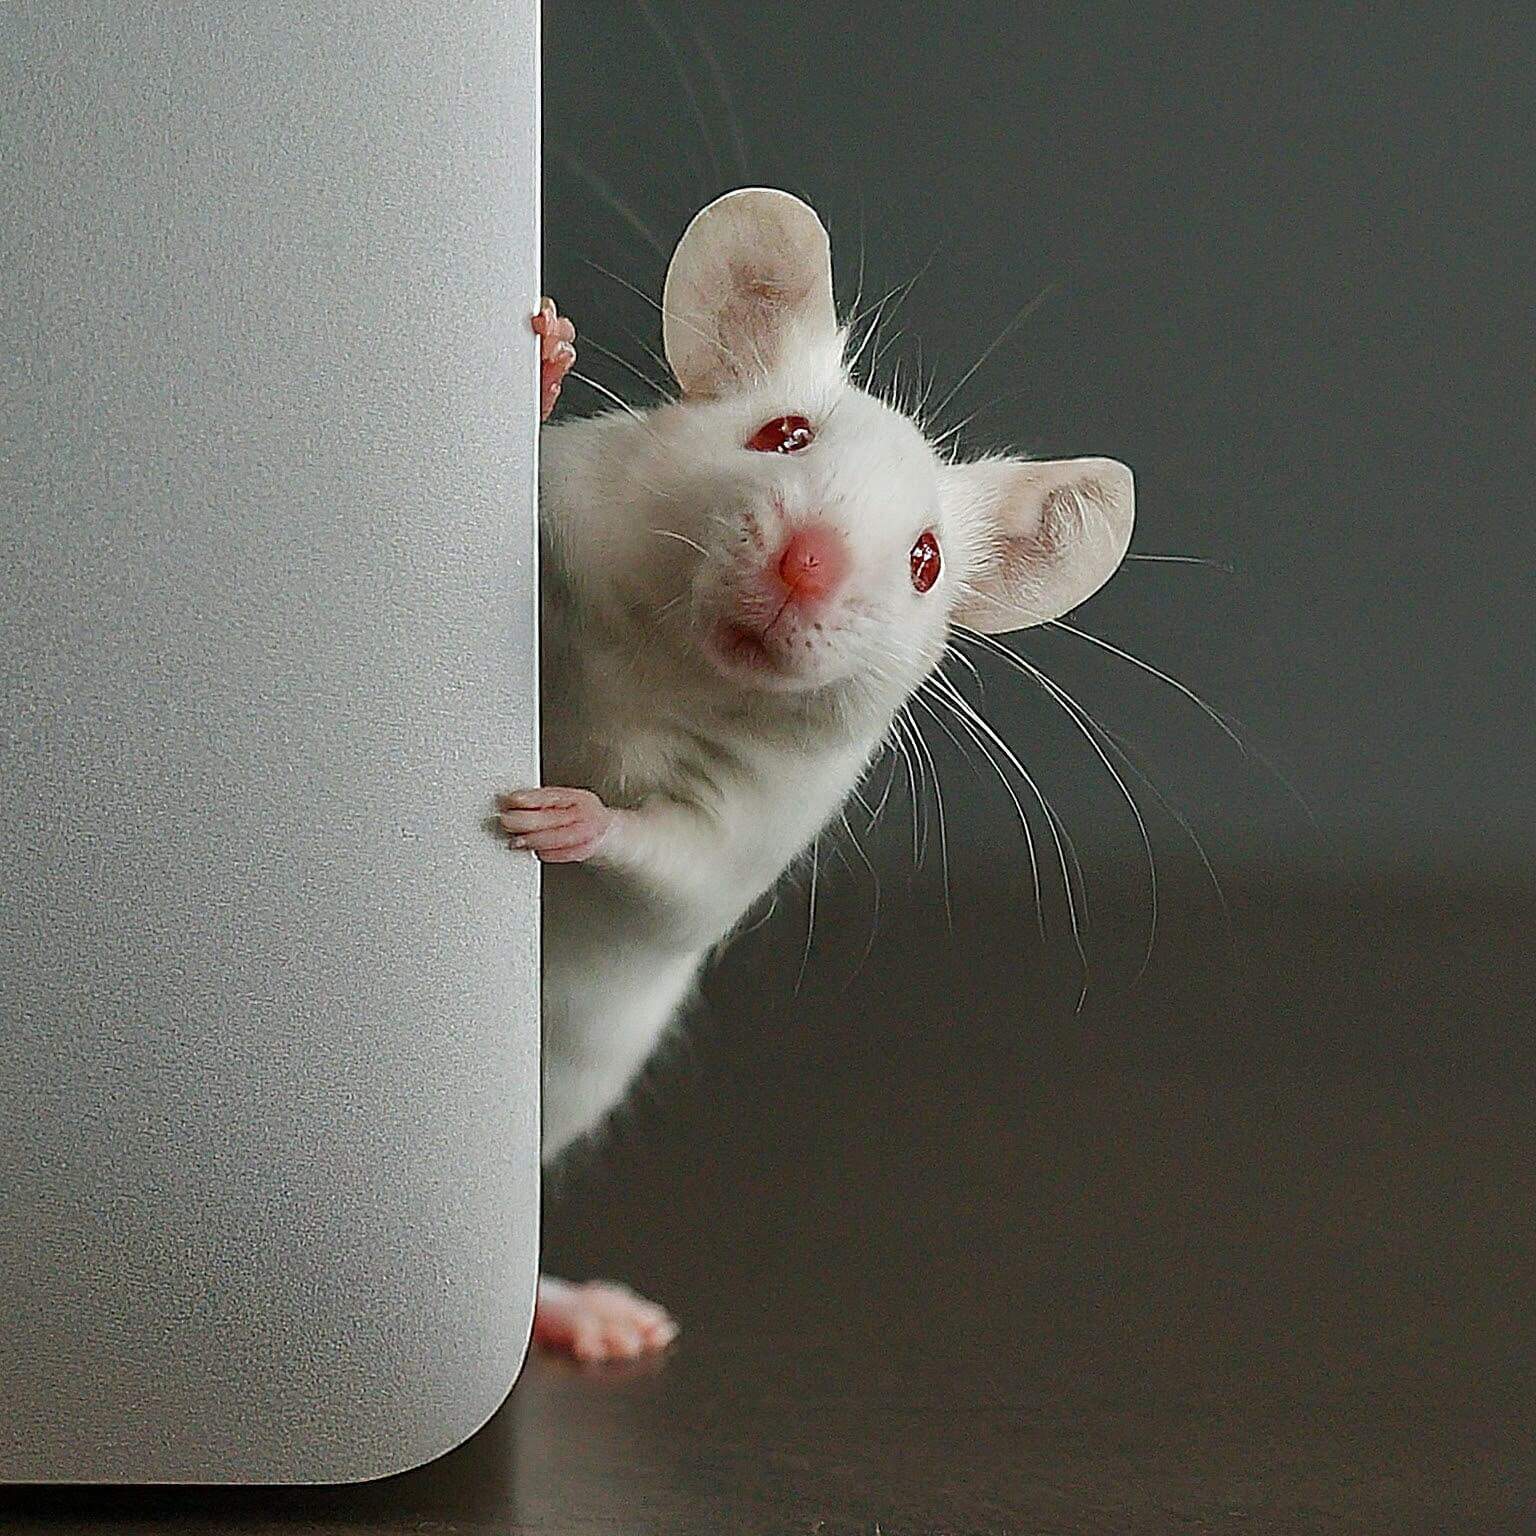 mouse hiding behind a laptop screen